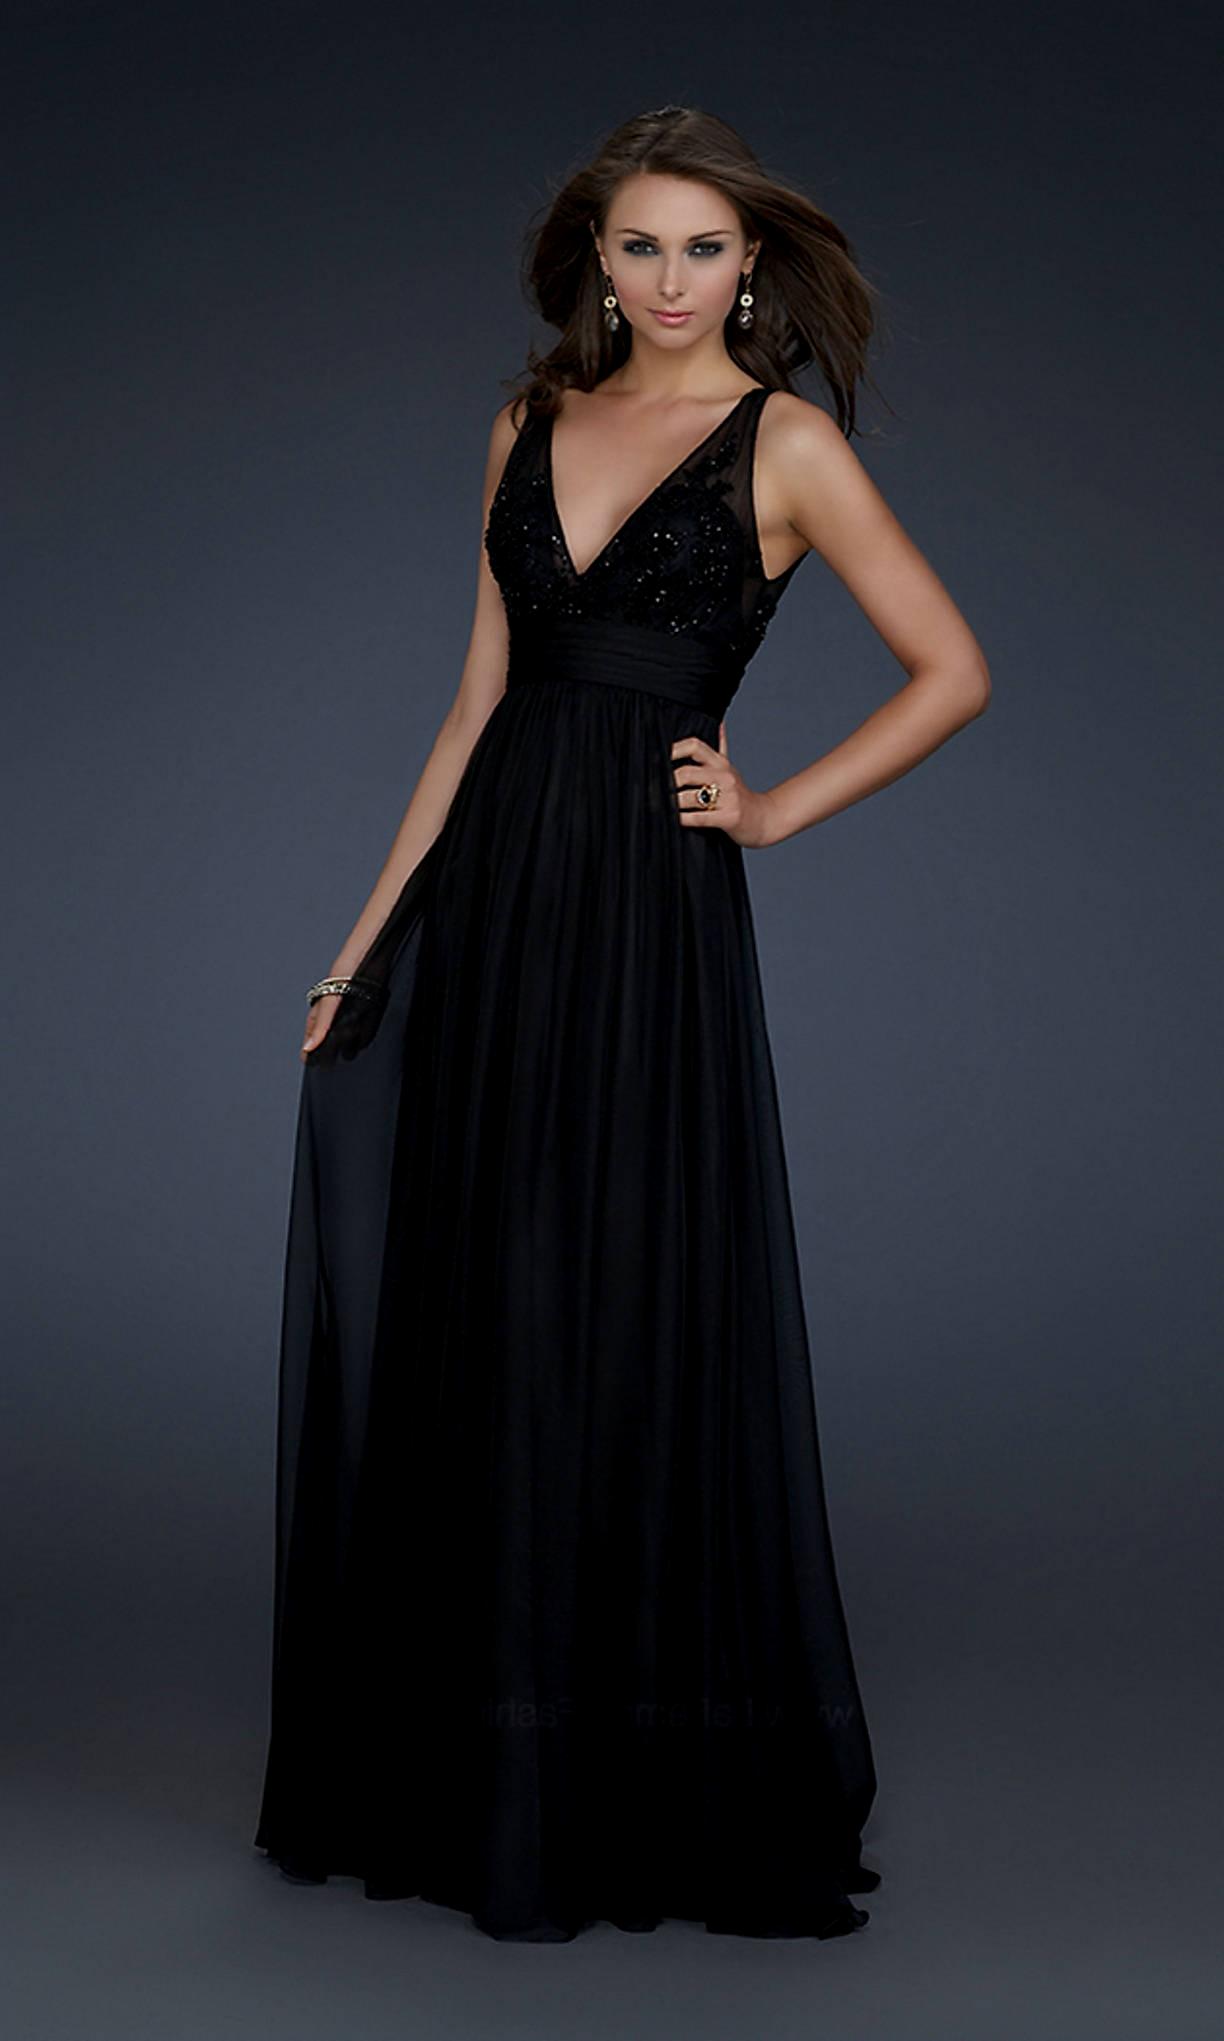 Long black dress photo